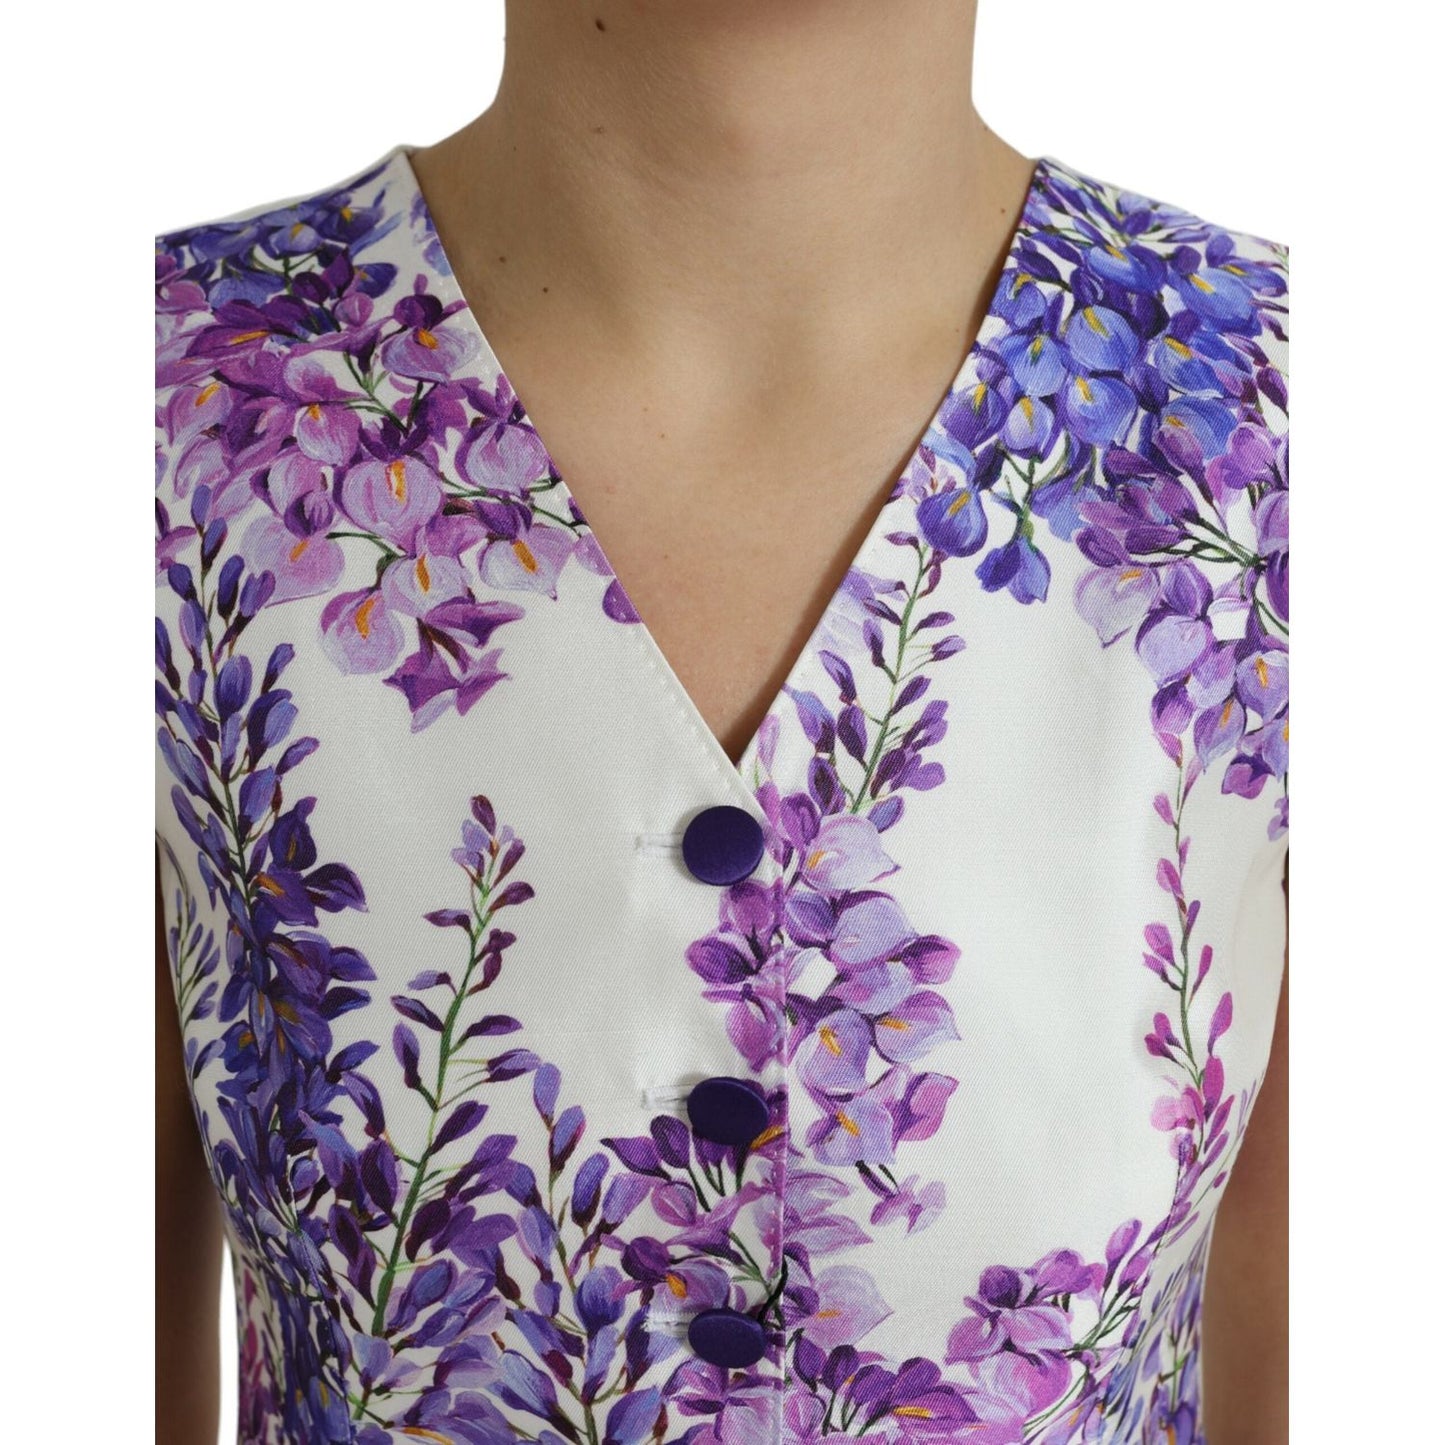 Dolce & GabbanaFloral Print Silk Blend WaistcoatMcRichard Designer Brands£519.00